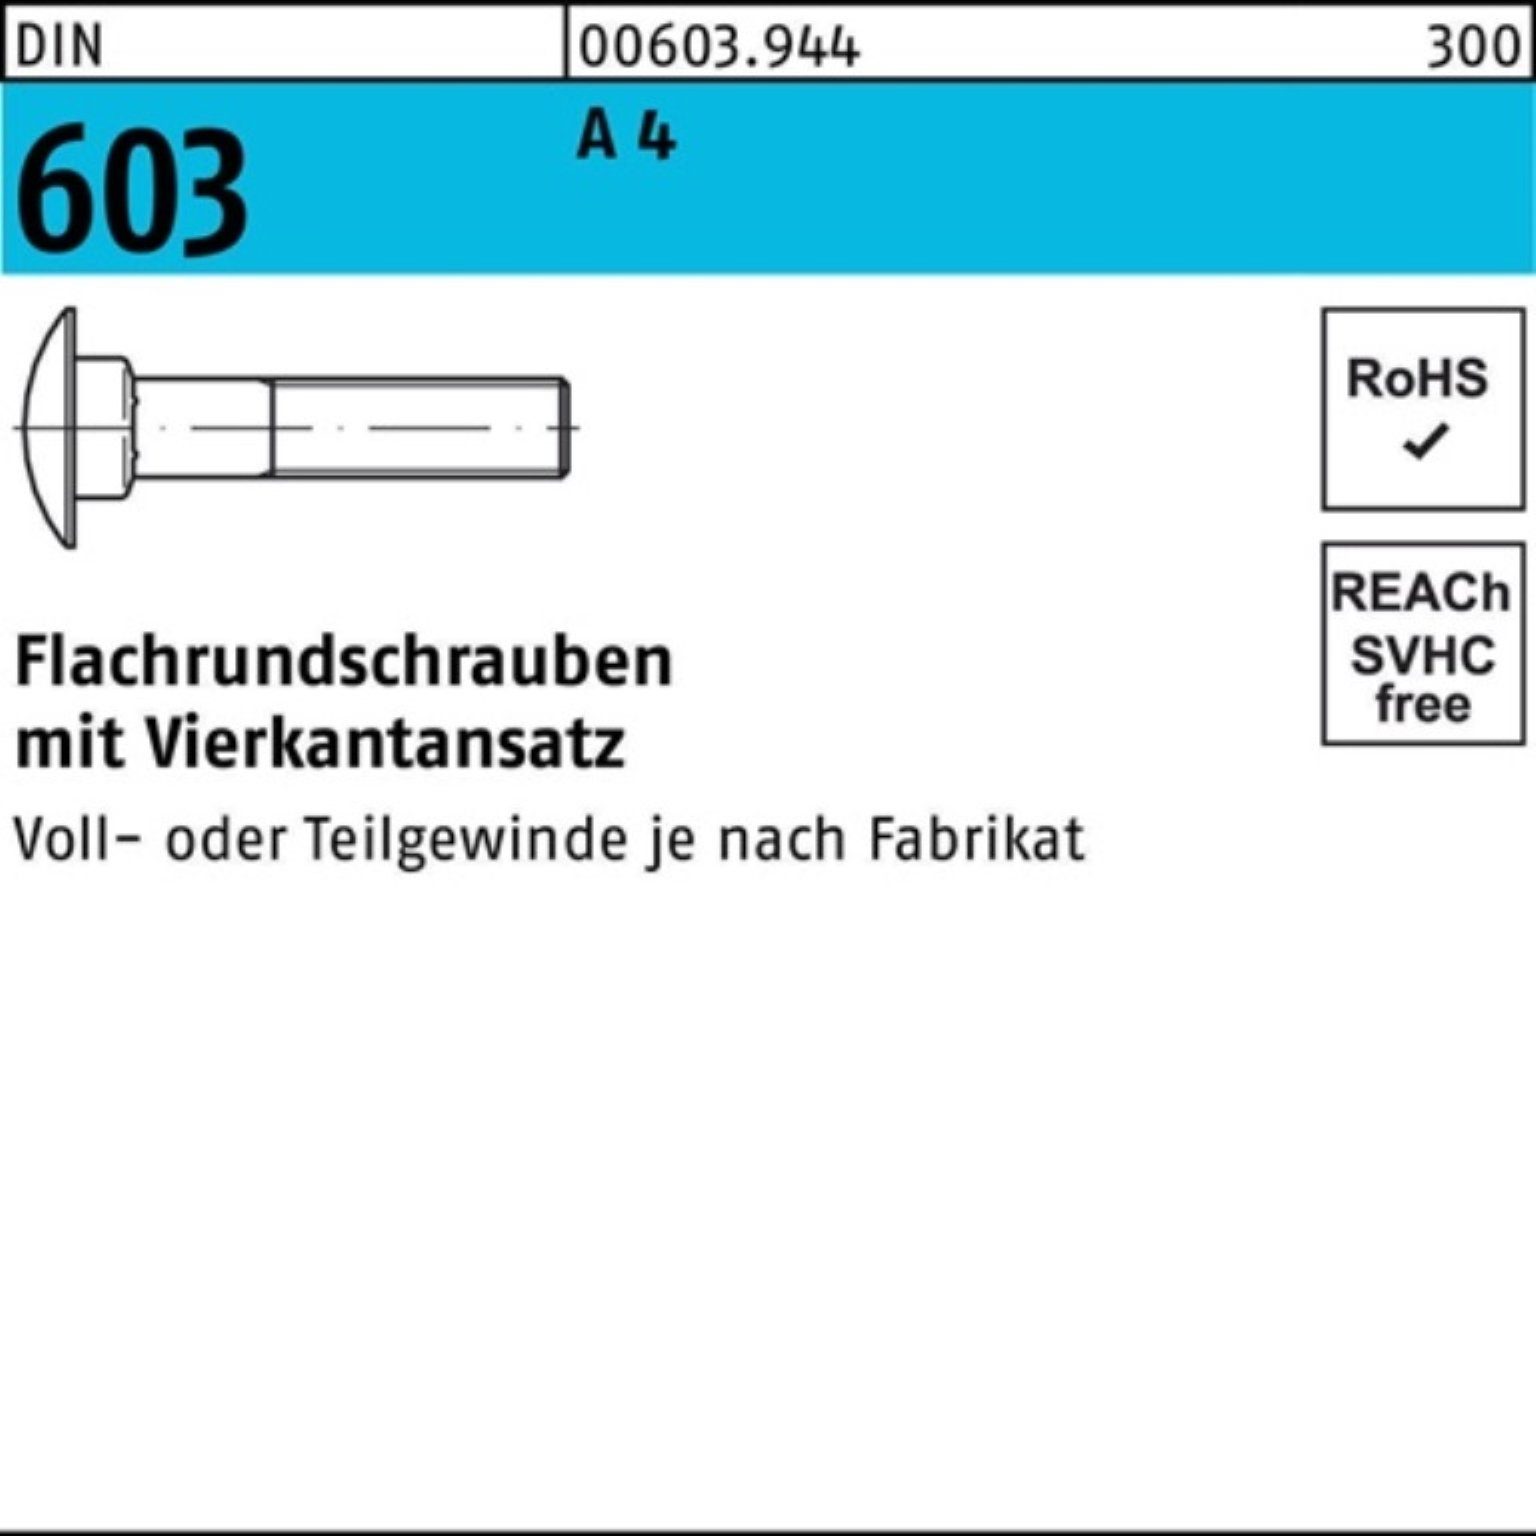 Reyher Schraube 100er Pack Flachrundschraube DIN 603 Vierkantansatz M8x 120 A 4 10 St